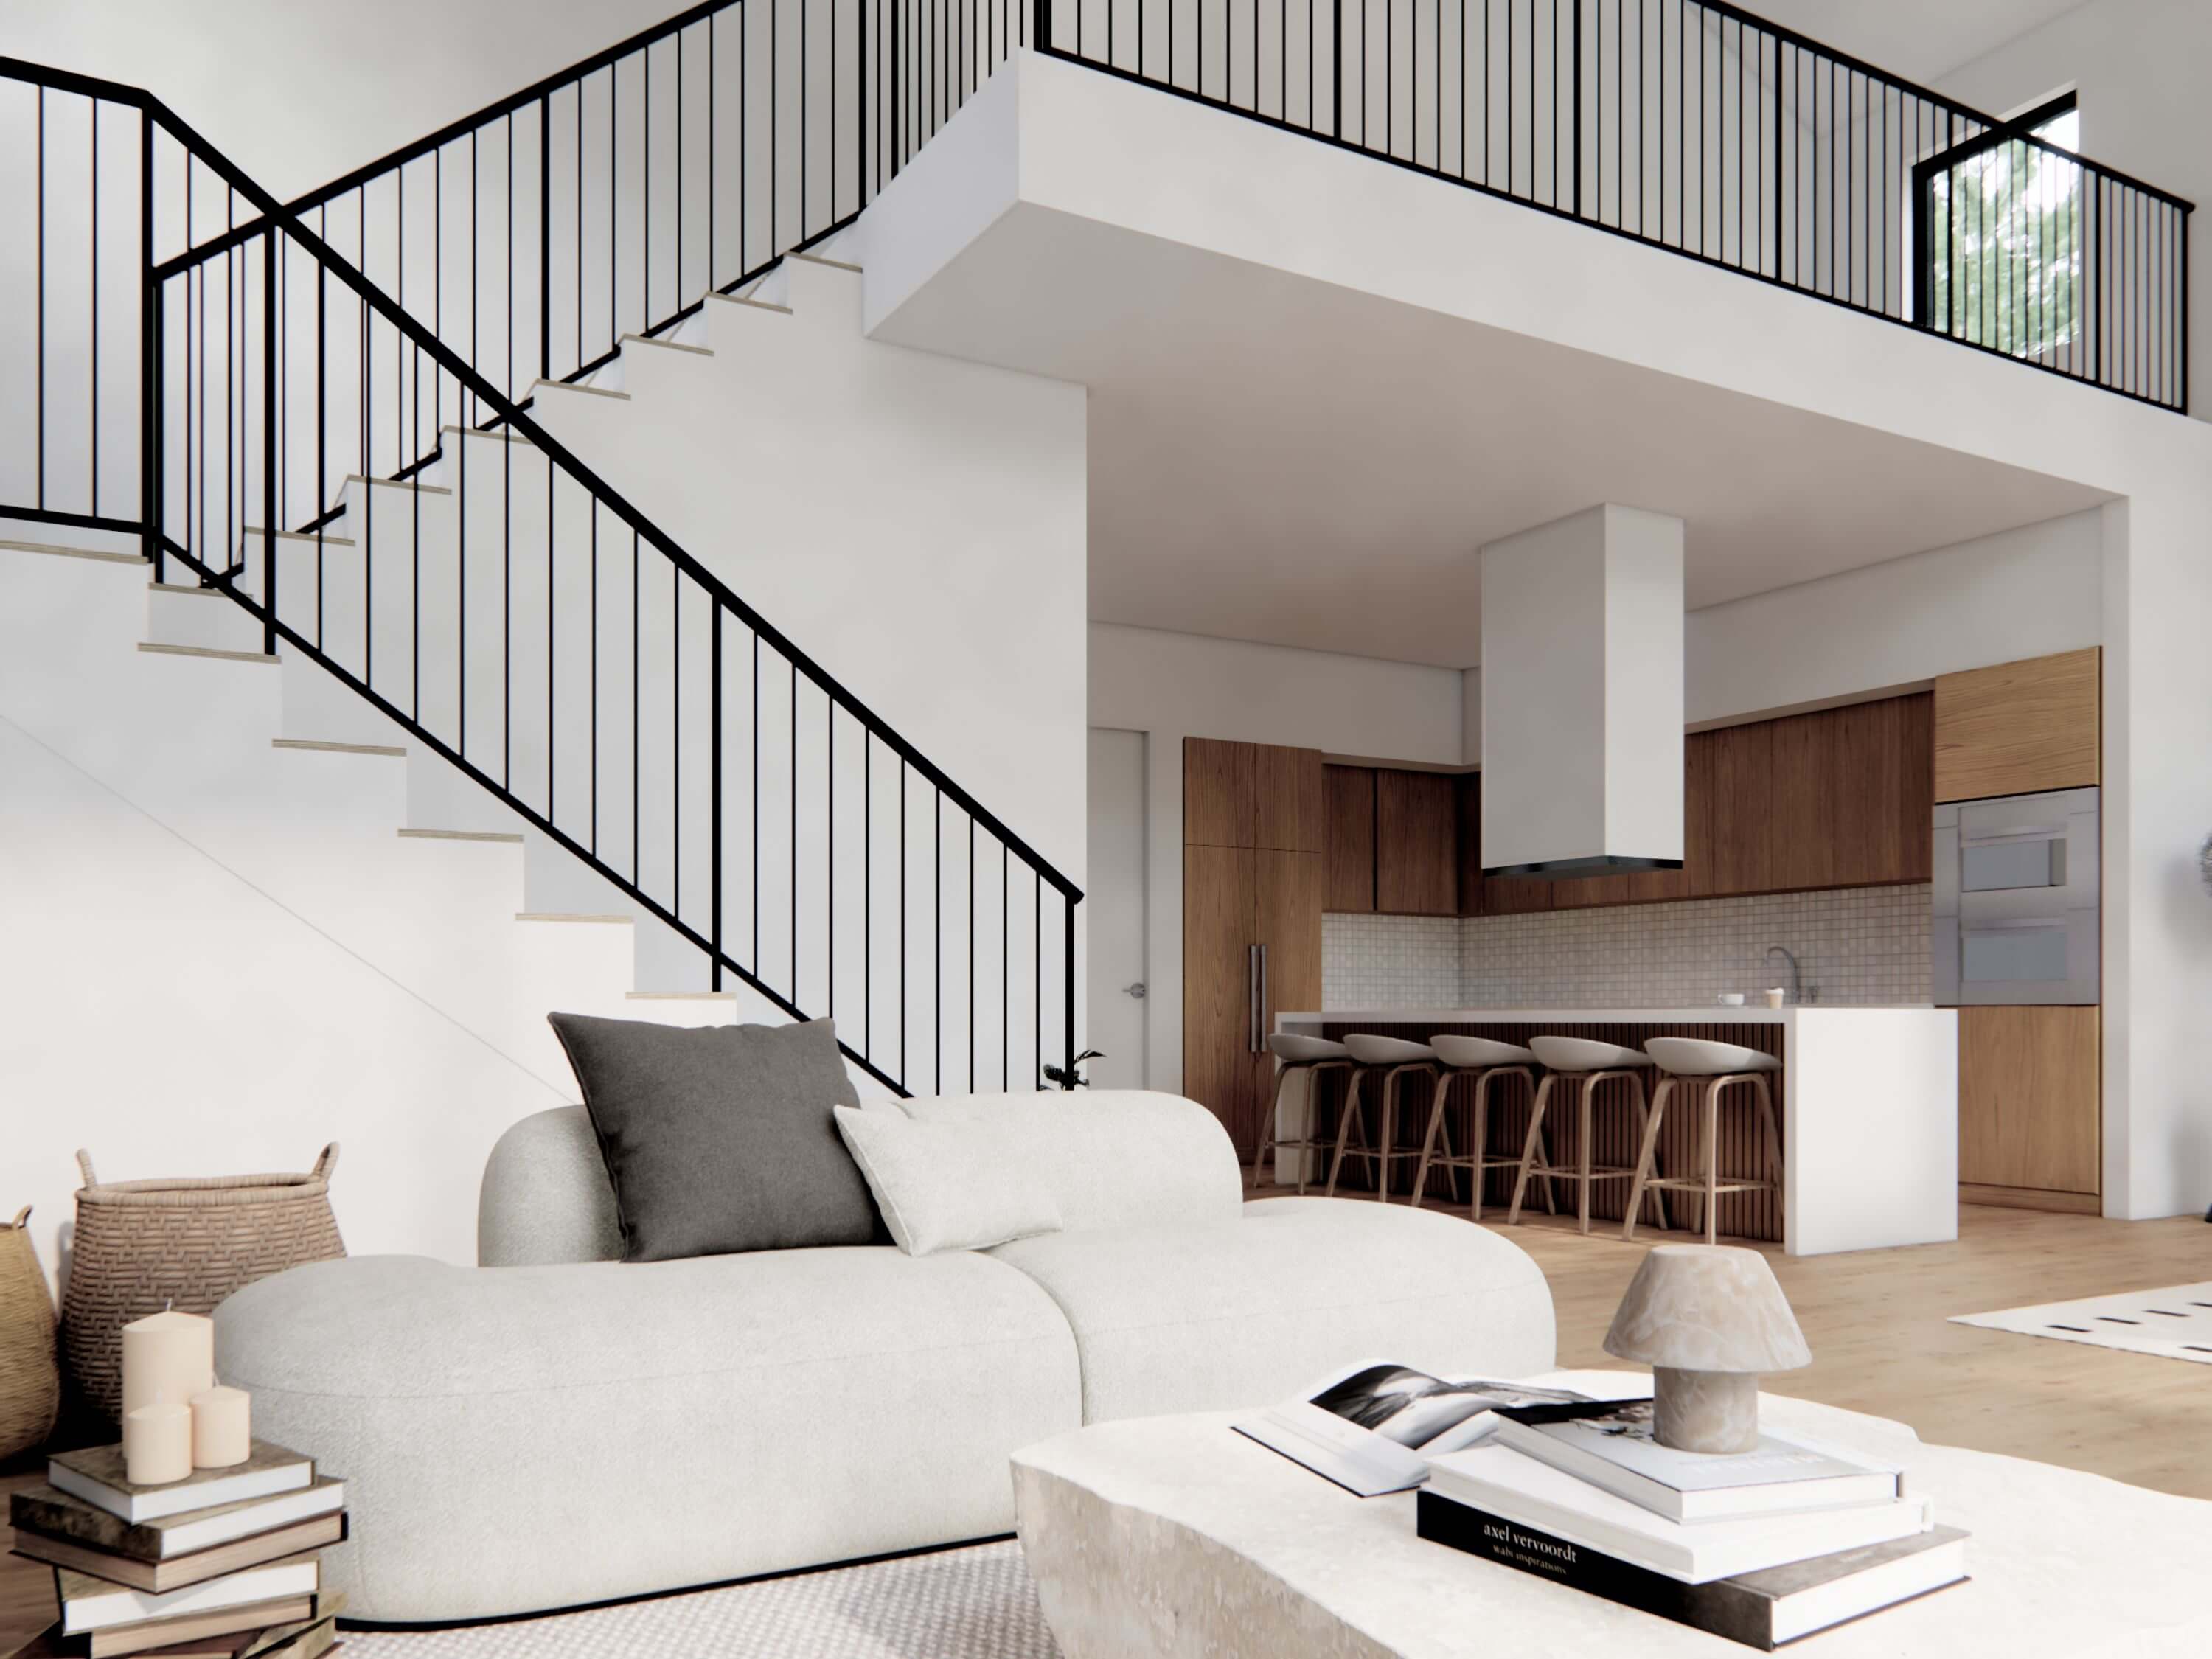 barndominium interior ideas: DWF 5BD Nordic Barndo Living Room, Kitchen and Loft Stair